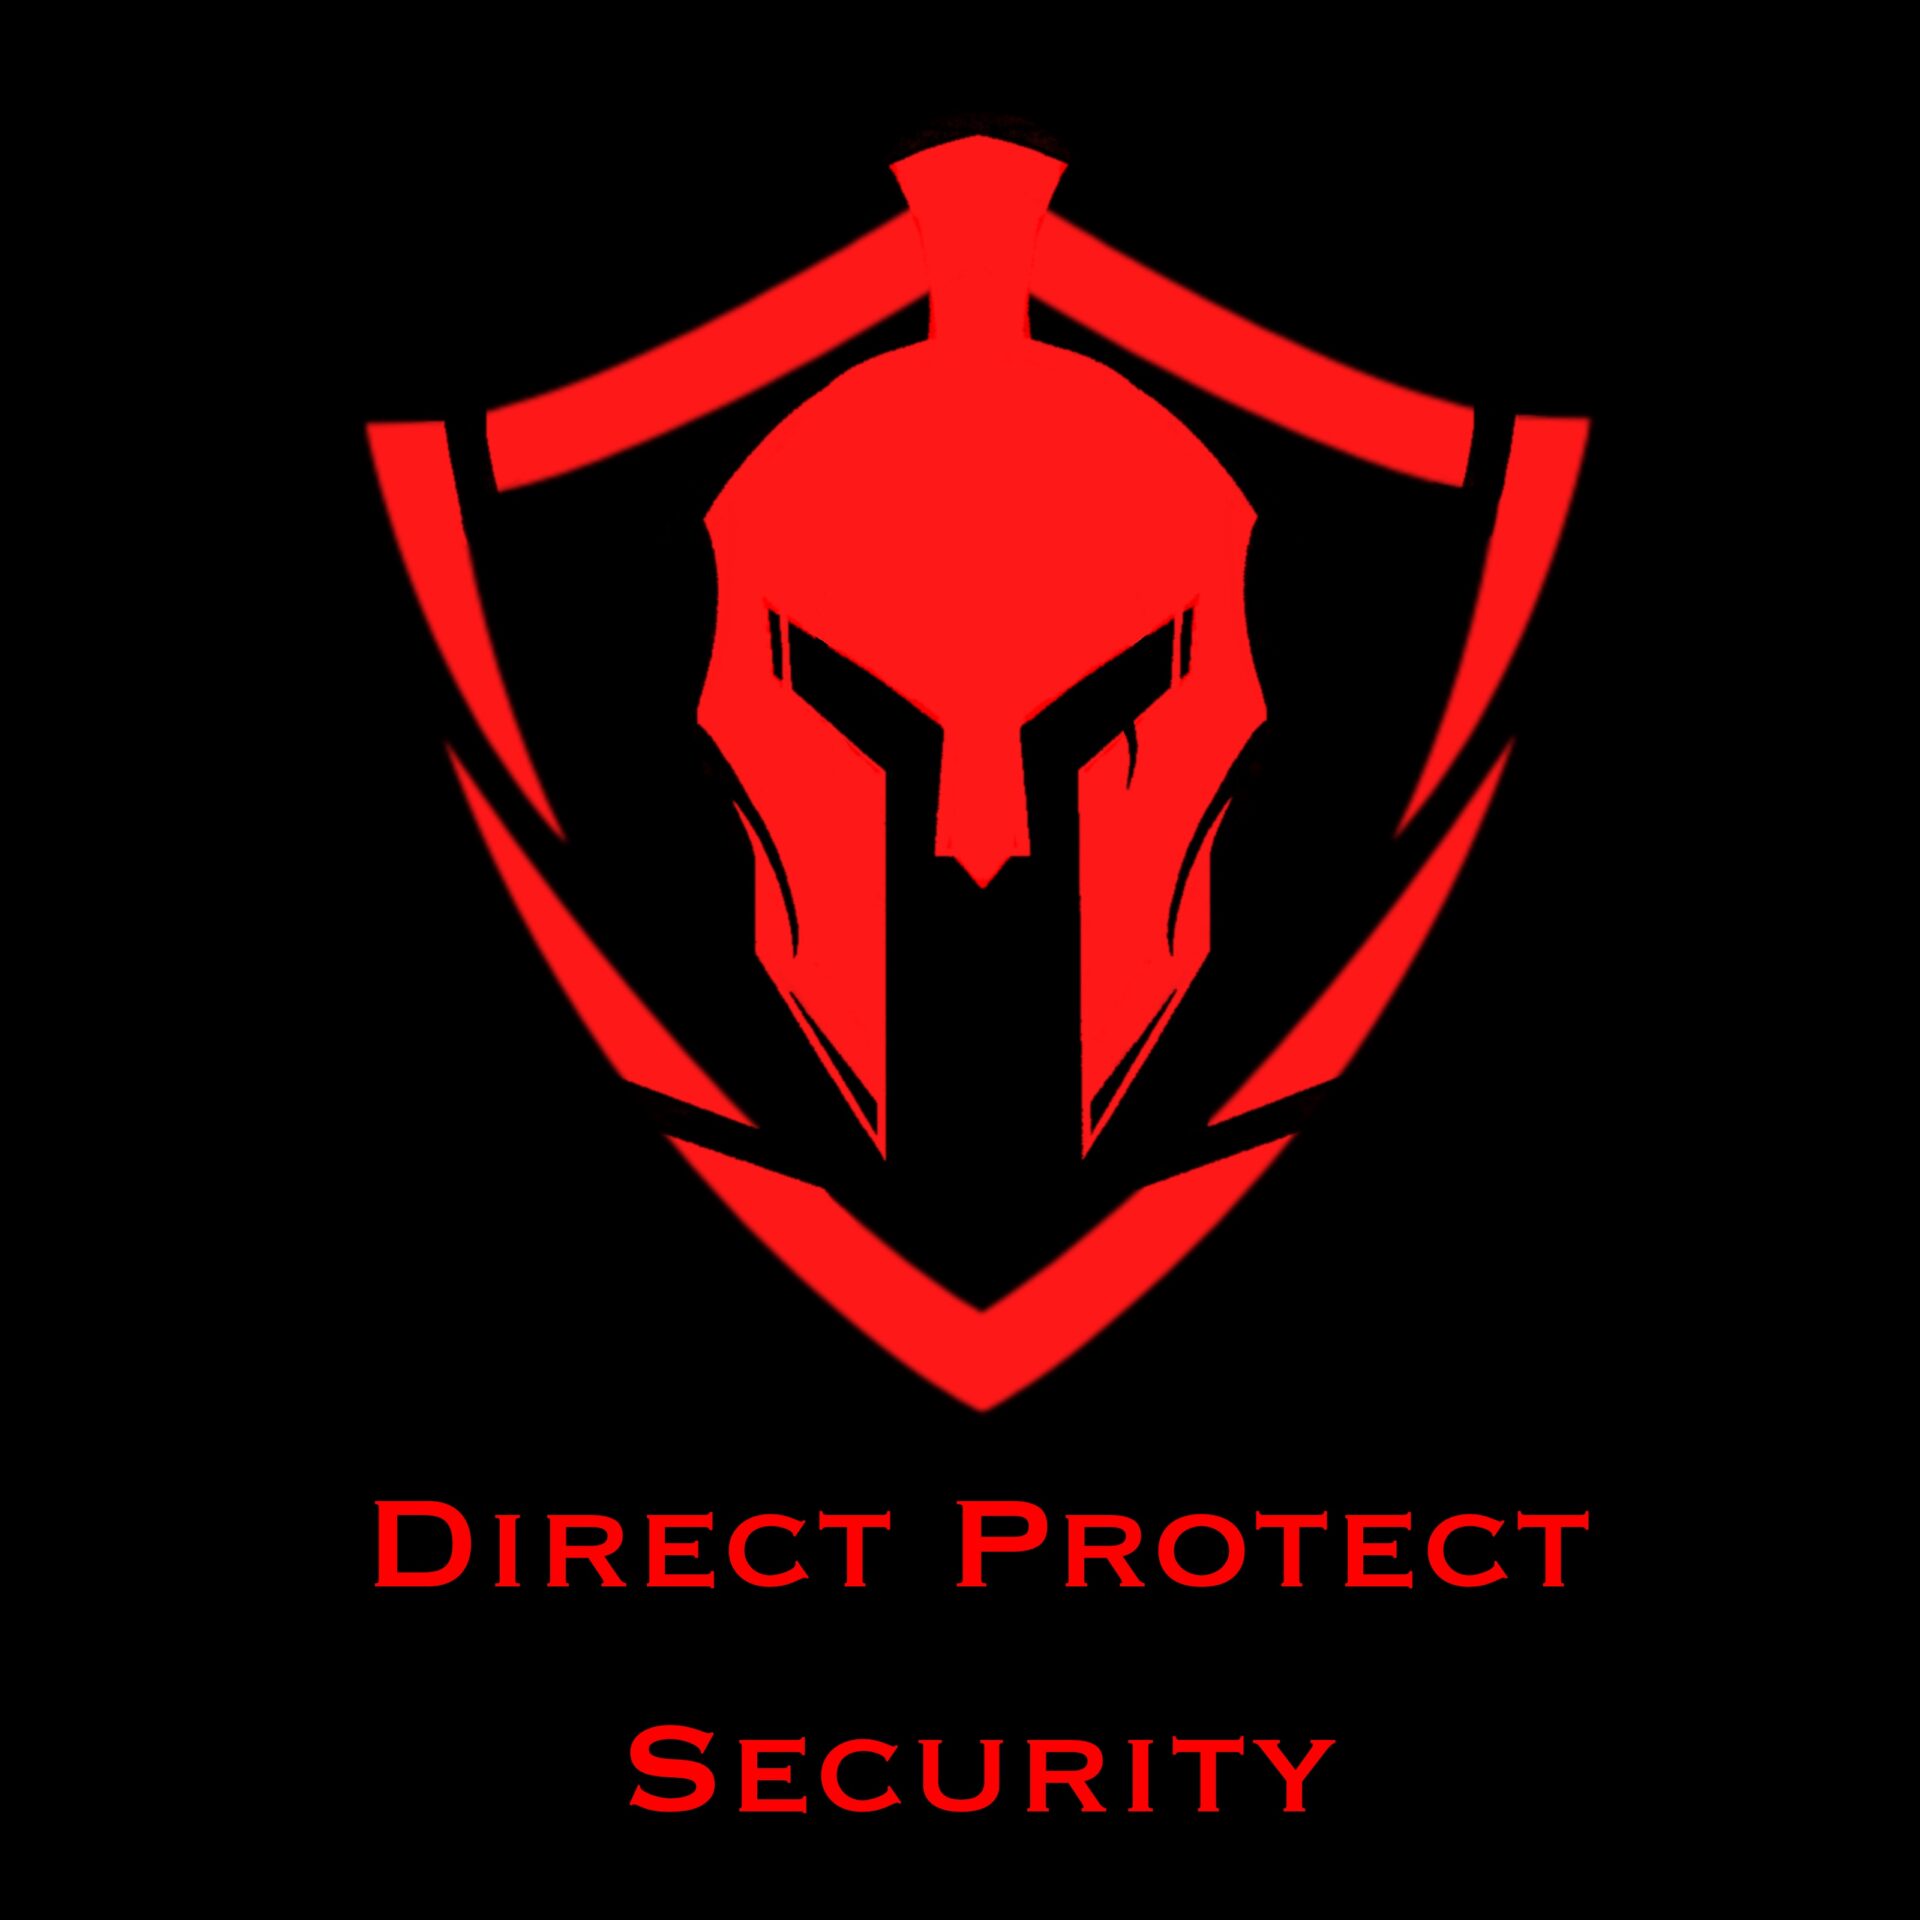 Direct protect logo